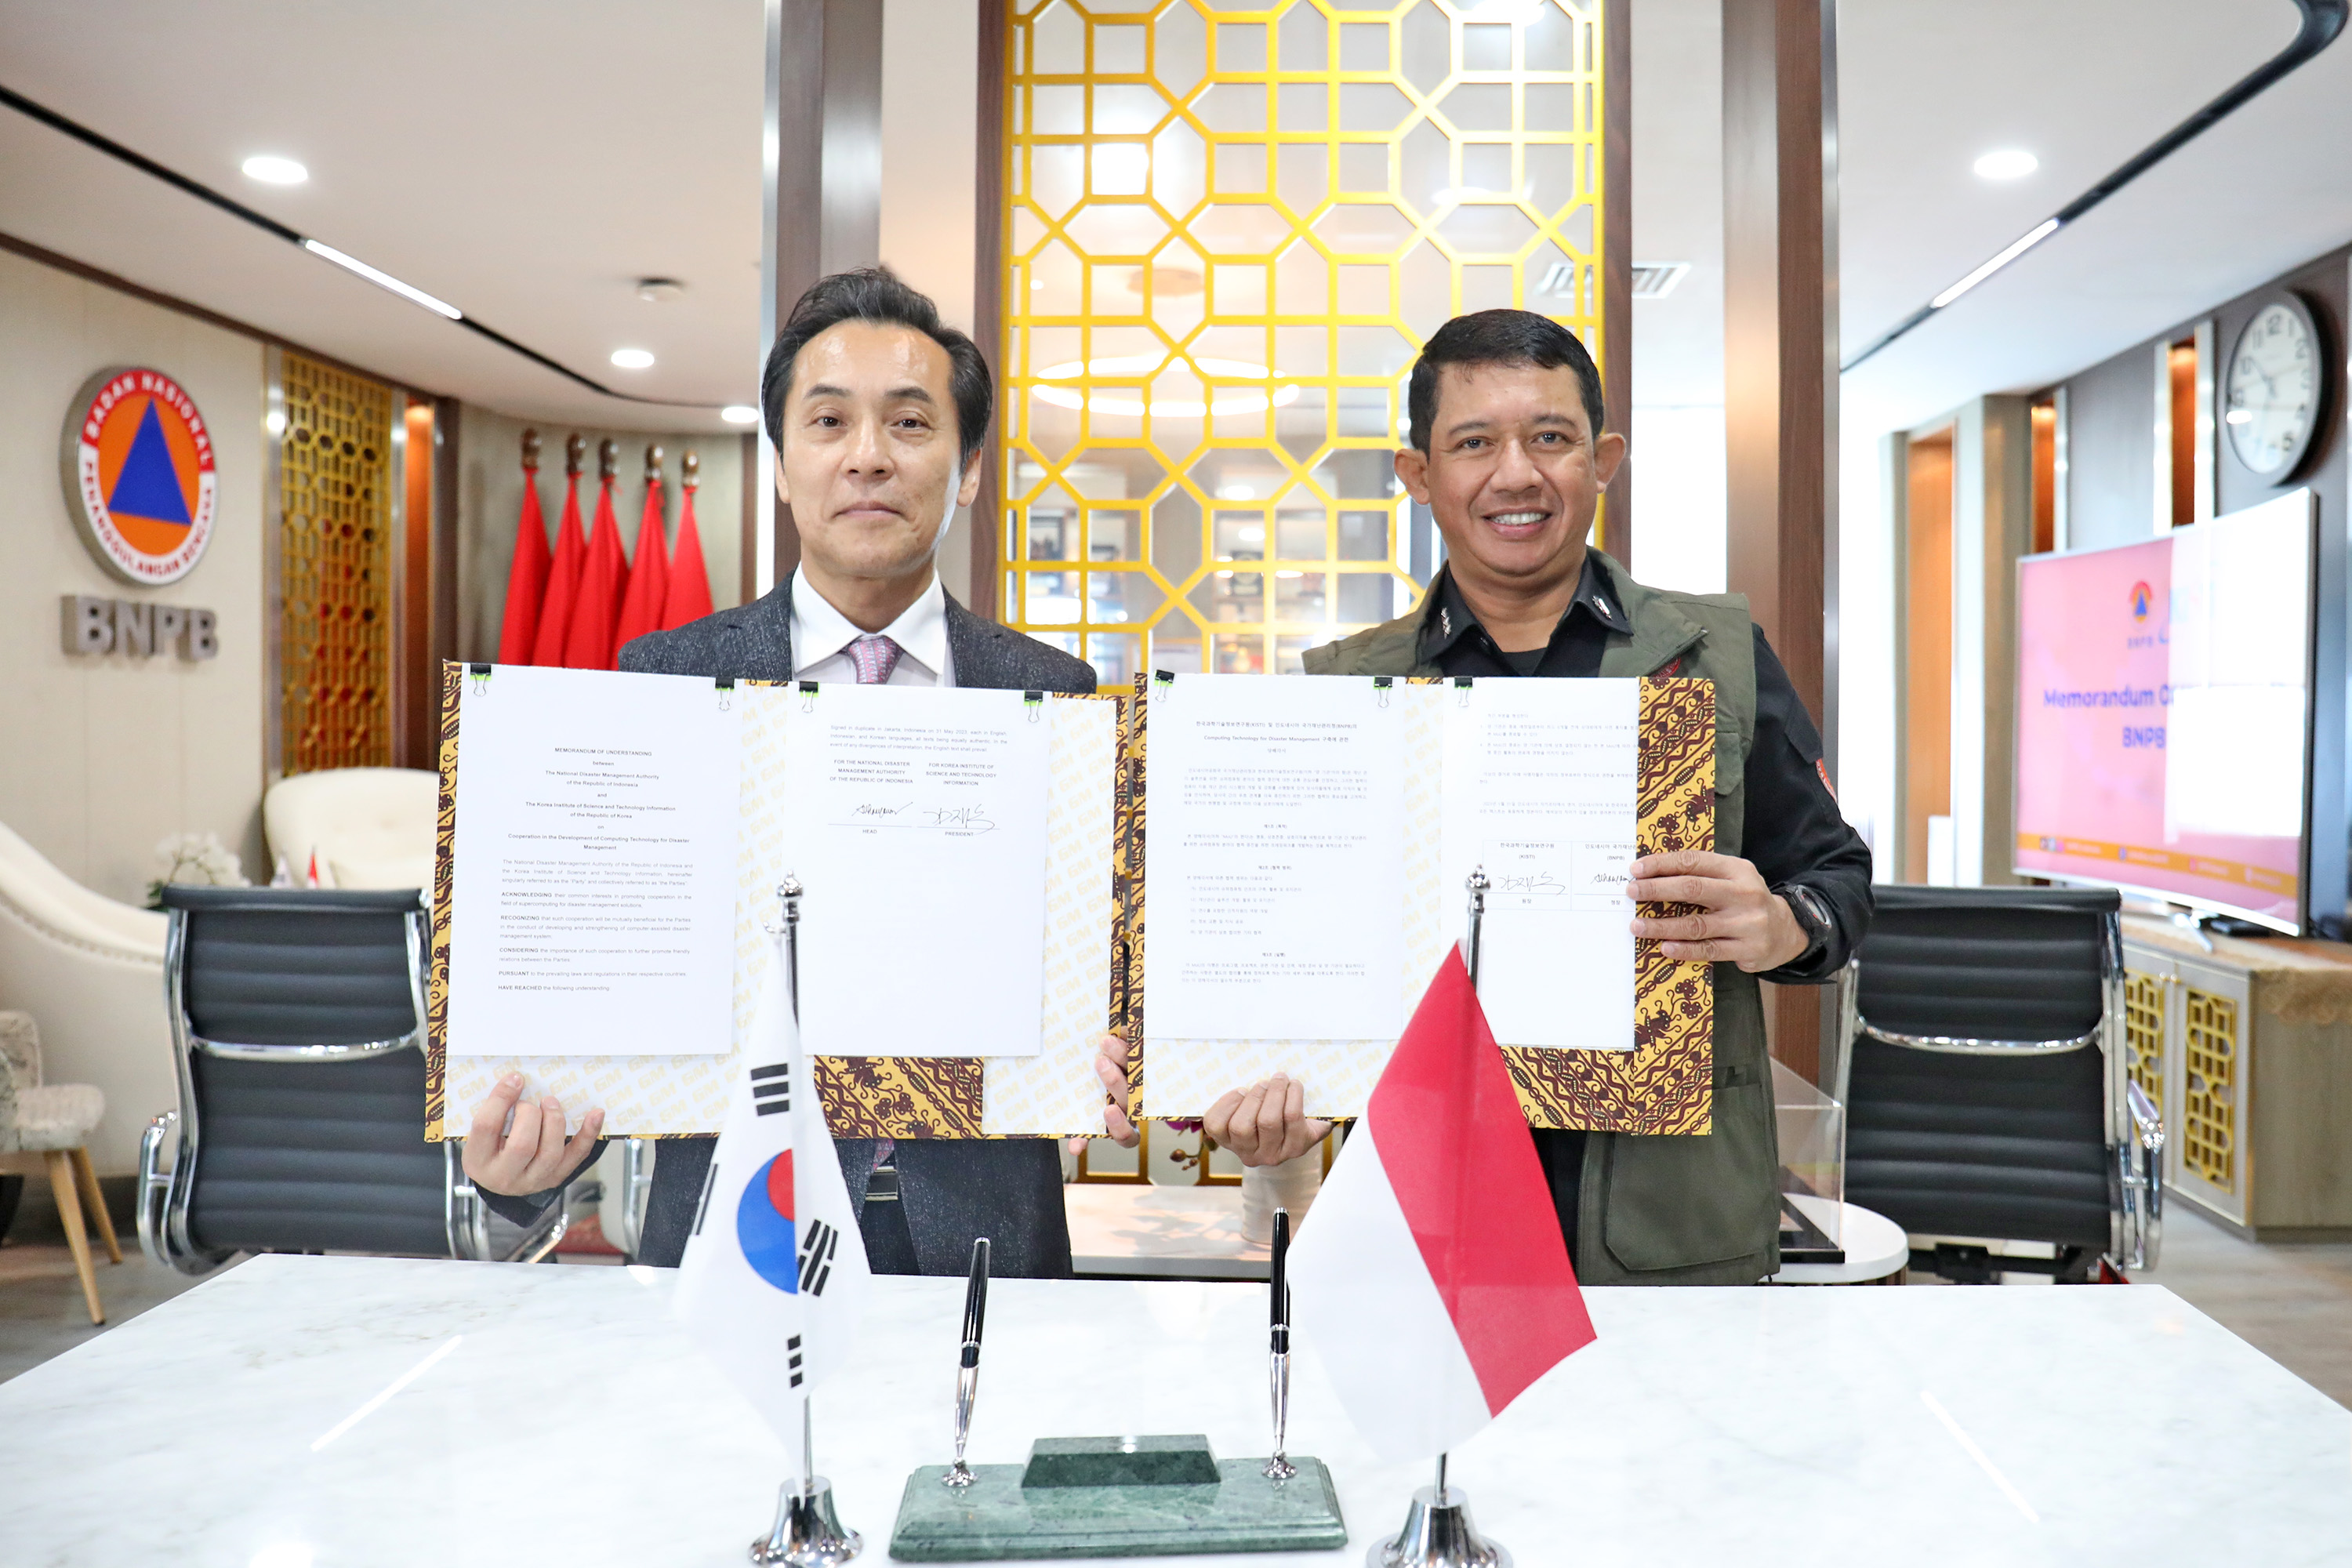 Kepala BNPB Letjen TNI Suharyanto S,Sos., M.M., (kanan) dan Presiden KISTI Kim Jaesoo menunjukkan berkas kerja sama usai penandatanganan nota kesepahaman di Graha BNPB, Jakarta, Rabu (31/5).